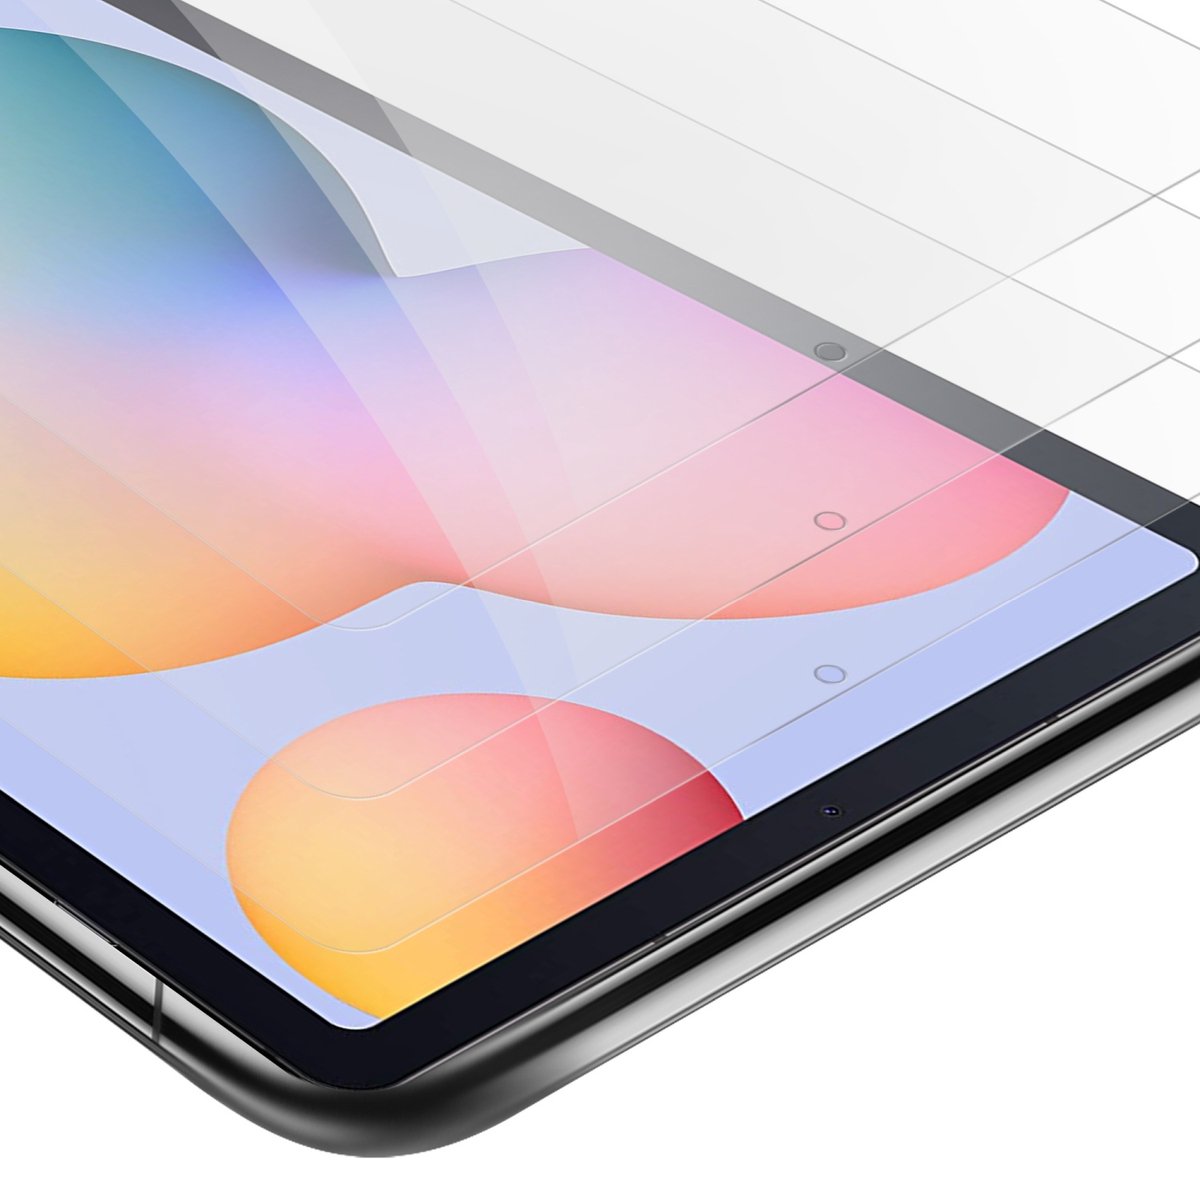 Cadorabo 3x Screenprotector voor Samsung Galaxy Tab S6 LITE (10.4 inch) in KRISTALHELDER - Getemperd Pantser Film (Tempered) Display beschermend glas in 9H hardheid met 3D Touch